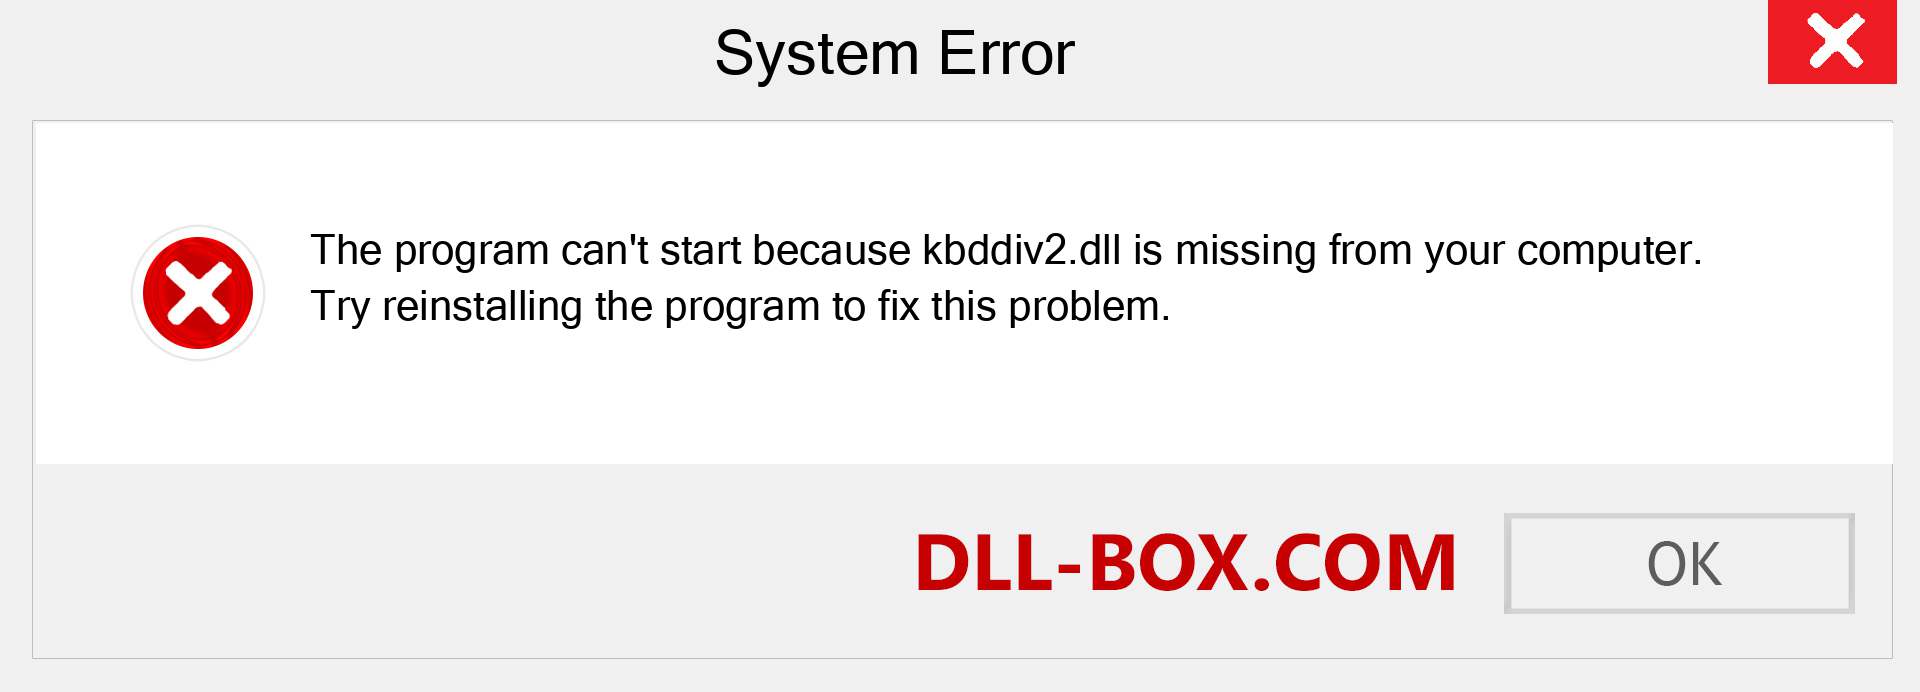  kbddiv2.dll file is missing?. Download for Windows 7, 8, 10 - Fix  kbddiv2 dll Missing Error on Windows, photos, images